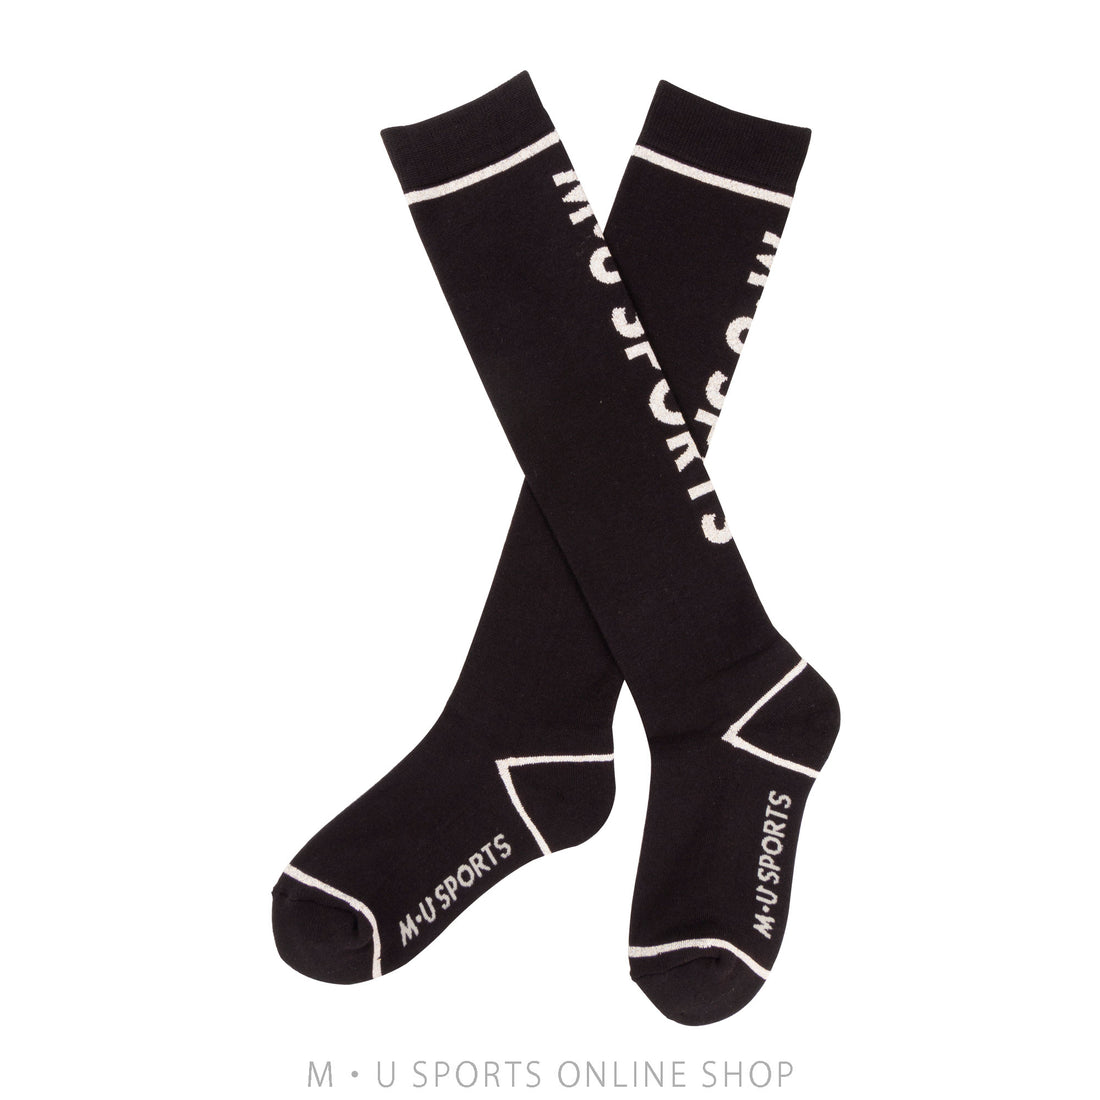 Knee-high socks (701J7754)